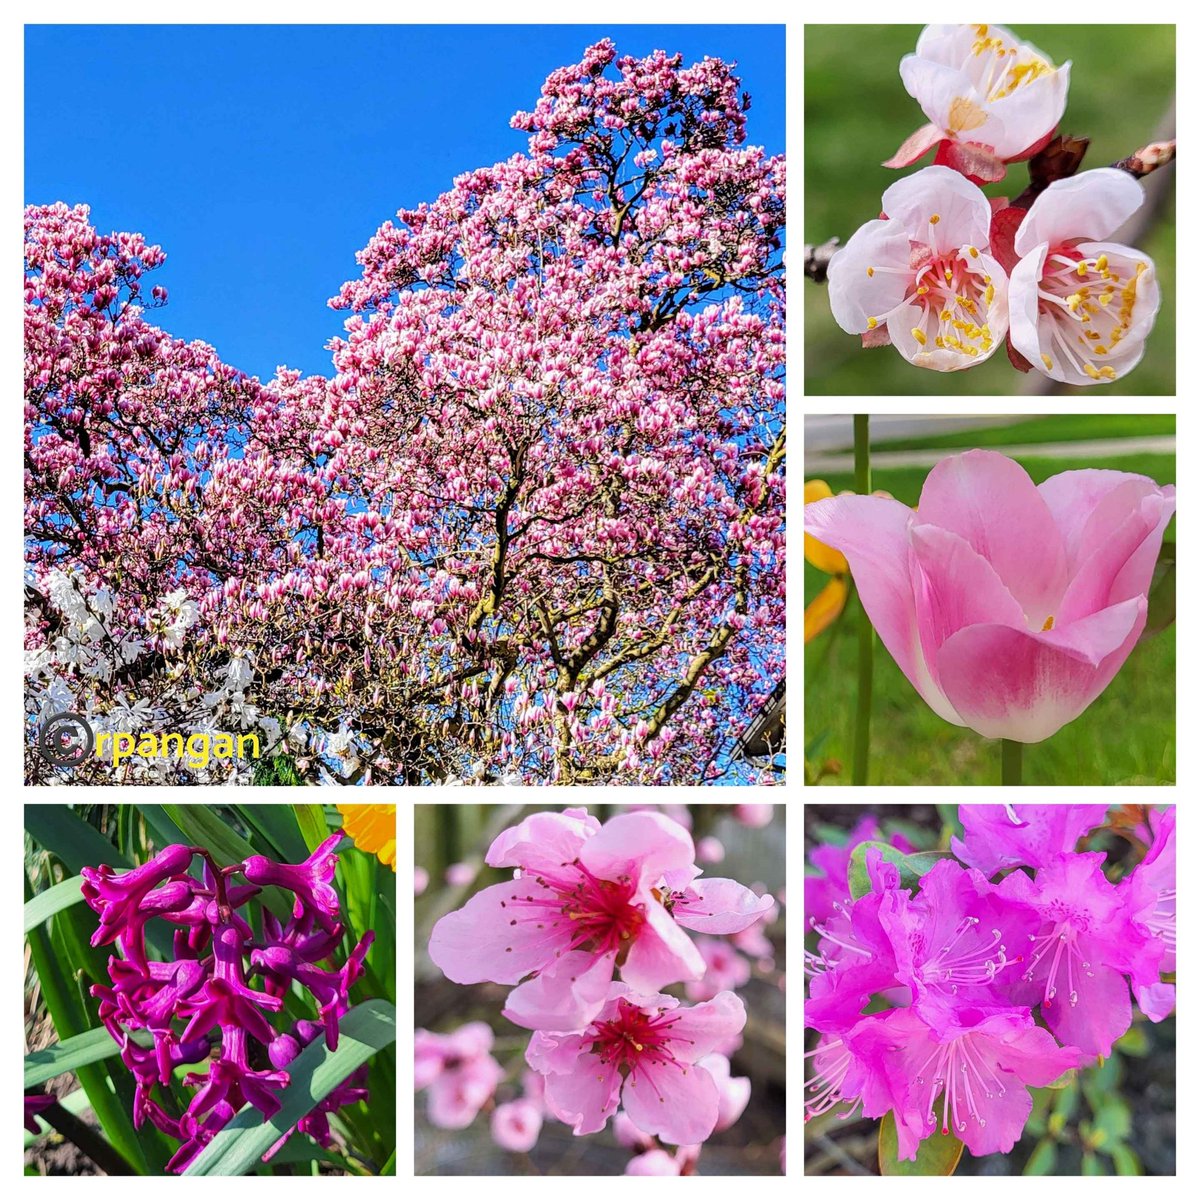 Pink flowers and blossoms in my garden and beyond in the  past few days. 🩷🌸😍
 #FlowersOnFriday #FlowersOfTwitter #garden #GardenersWorld #PinkFriday